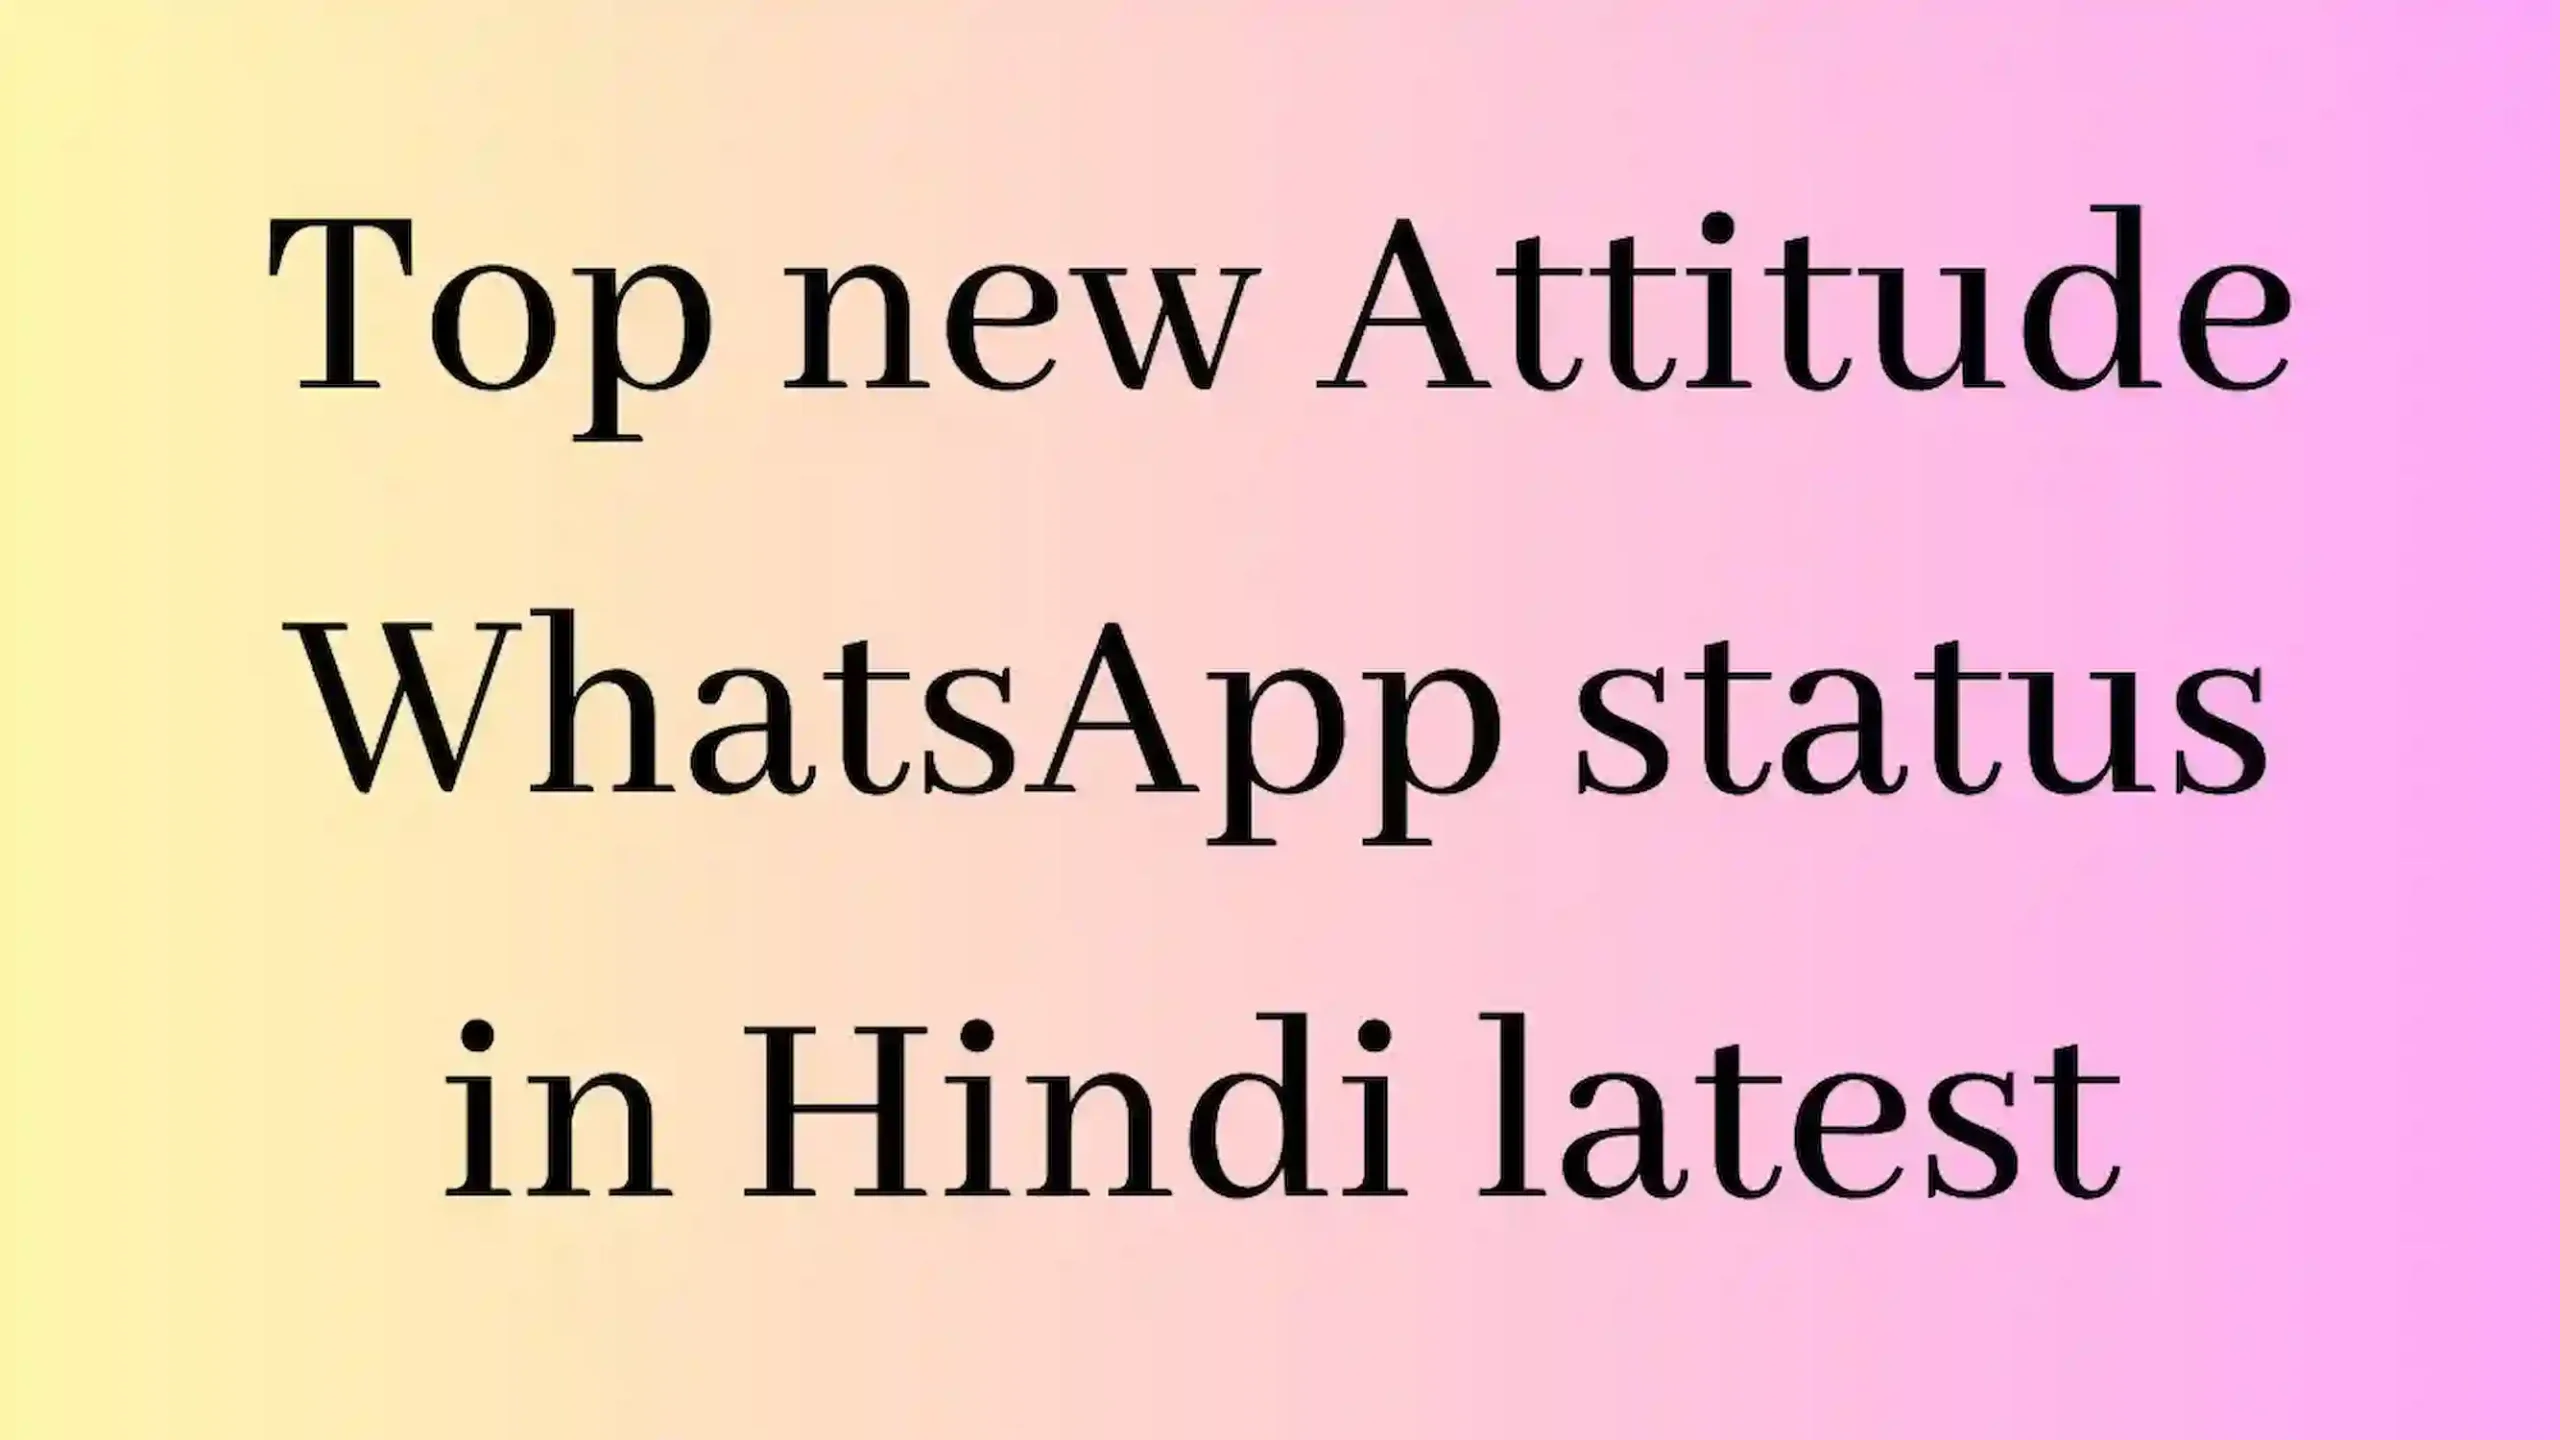 Top new Attitude WhatsApp status in Hindi latest